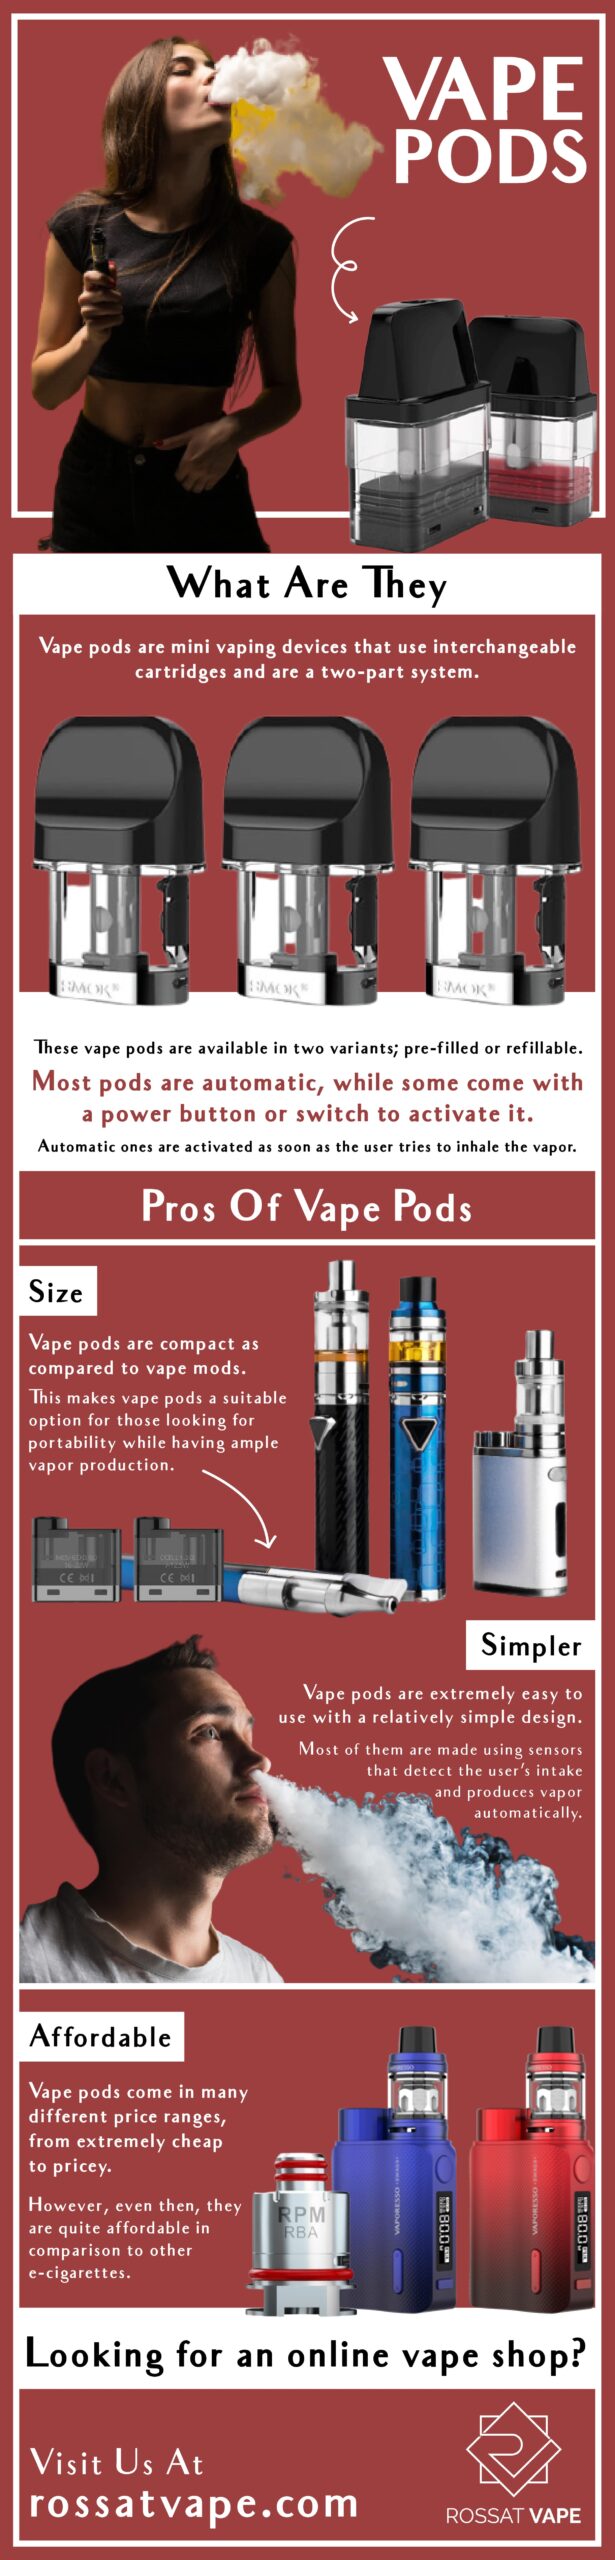 Vape Pods Infographic